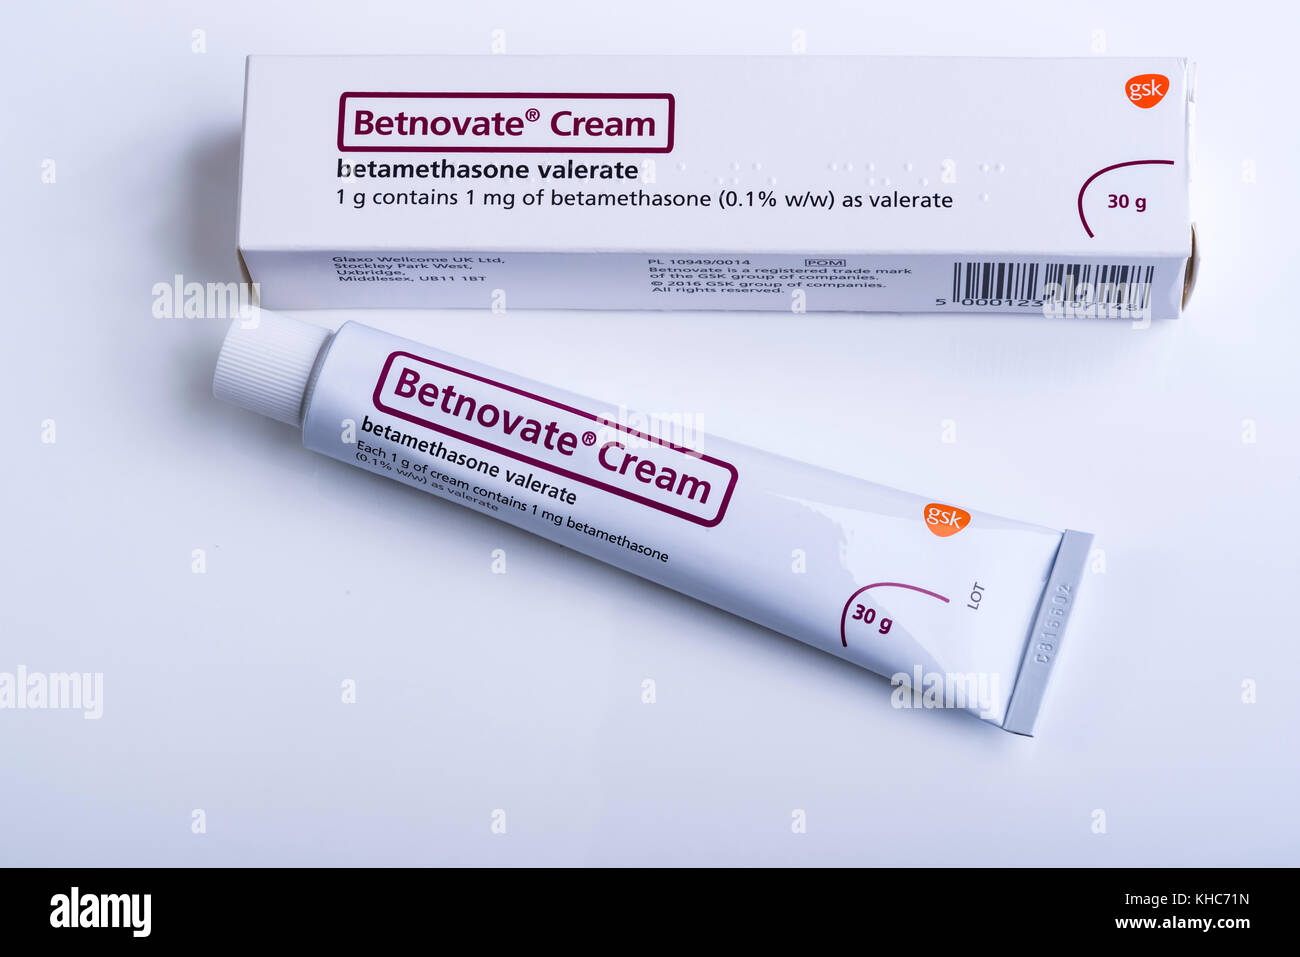 Betnovate cream, Glaxo Wellcome, GSK, Stock Photo